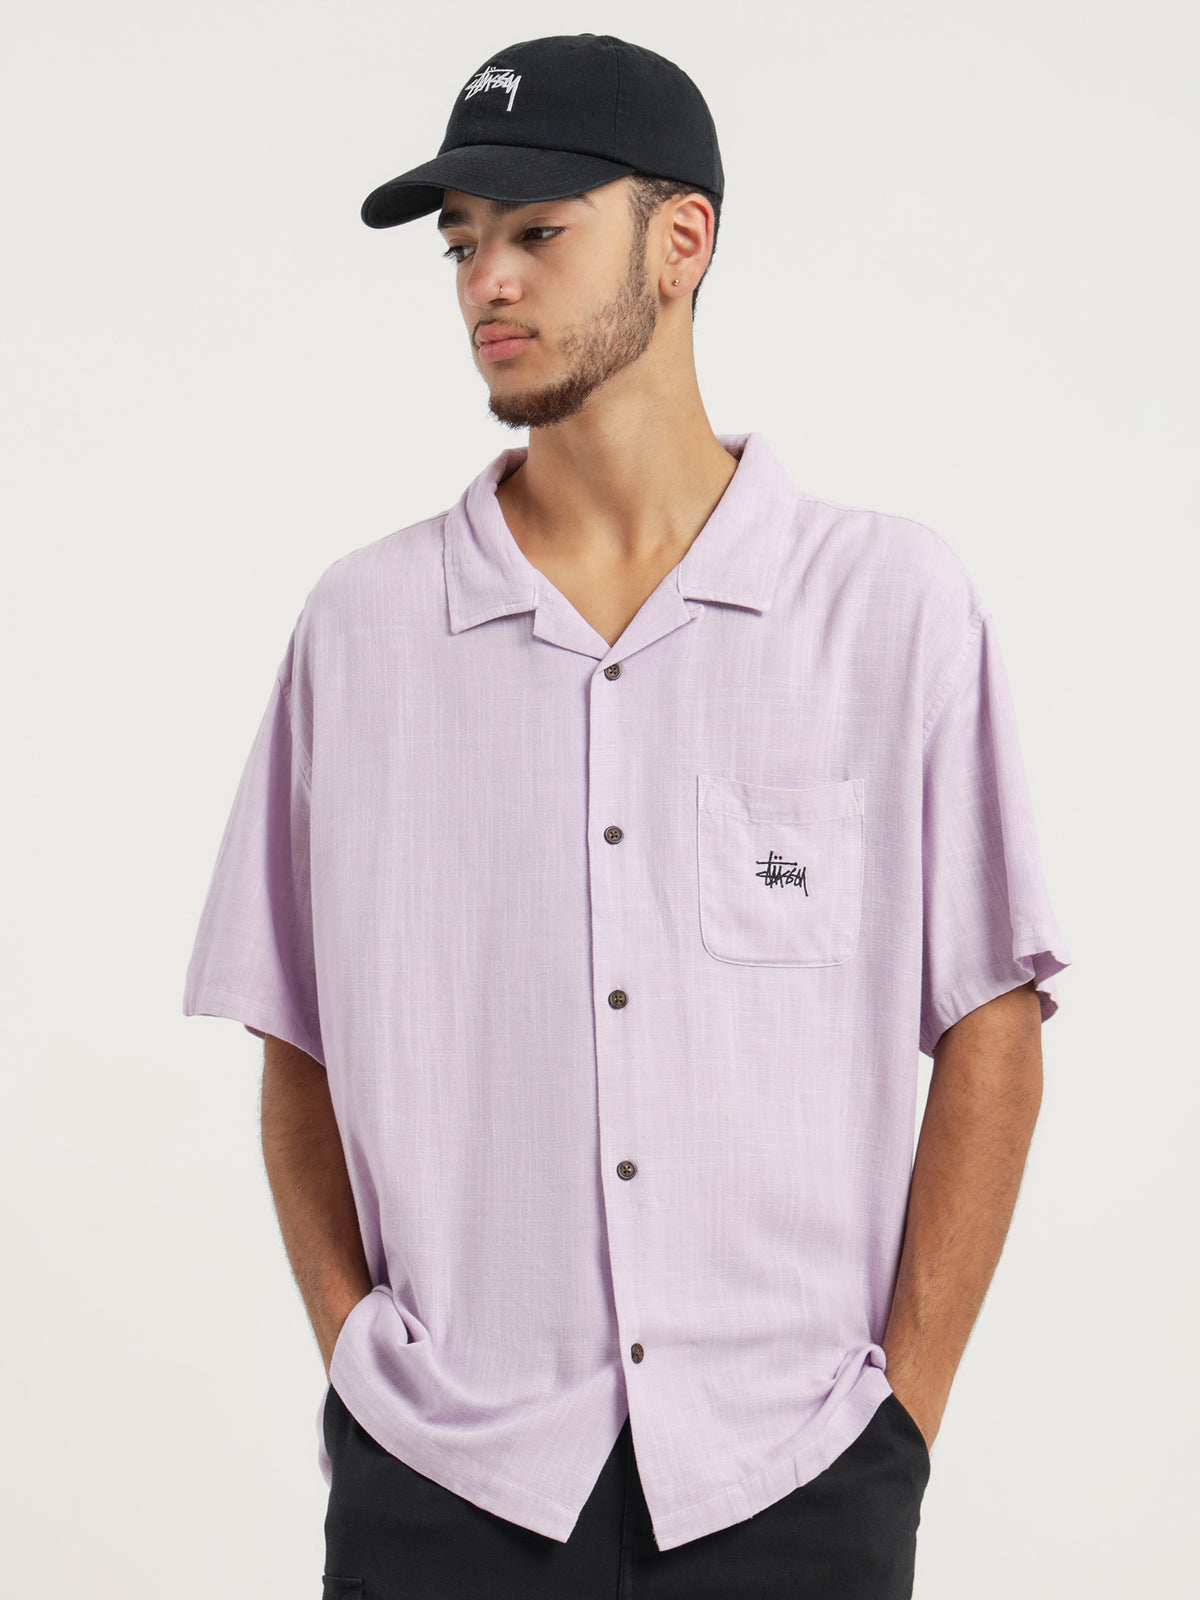 Graffiti Pigment Short Sleeve Shirt in Orchid Purple